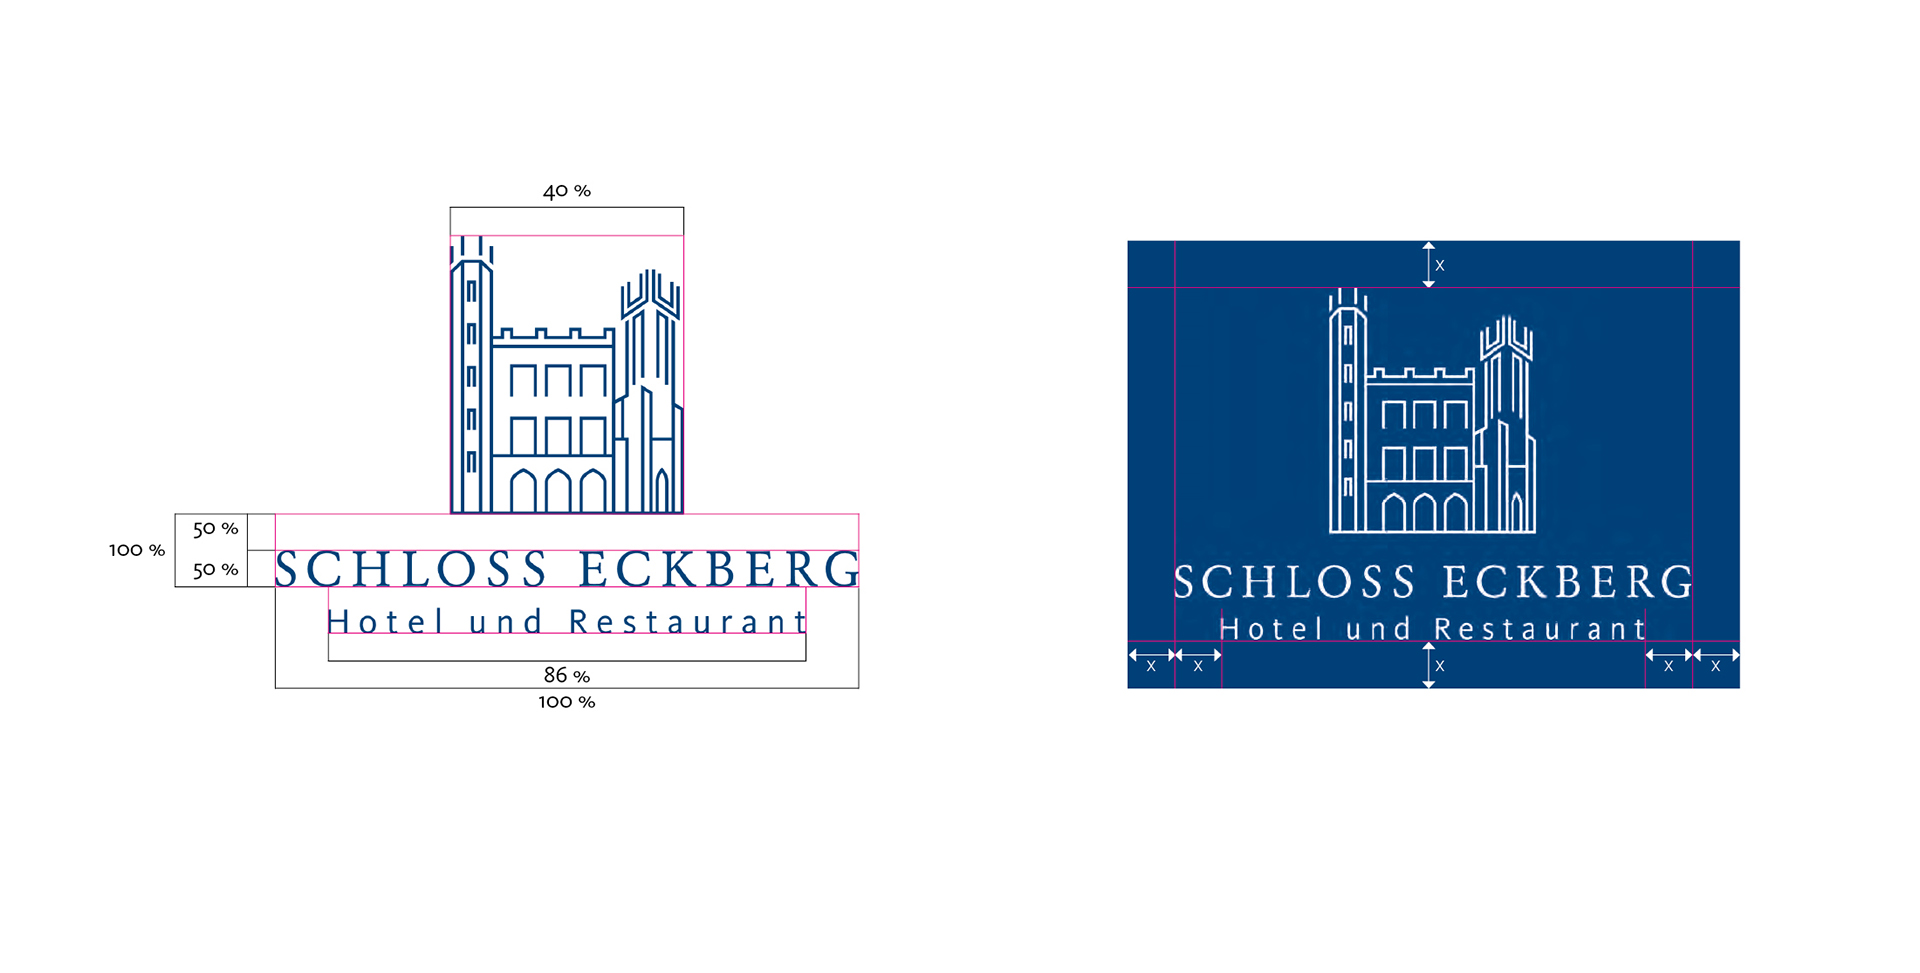 Schloss_Eckberg_container_2